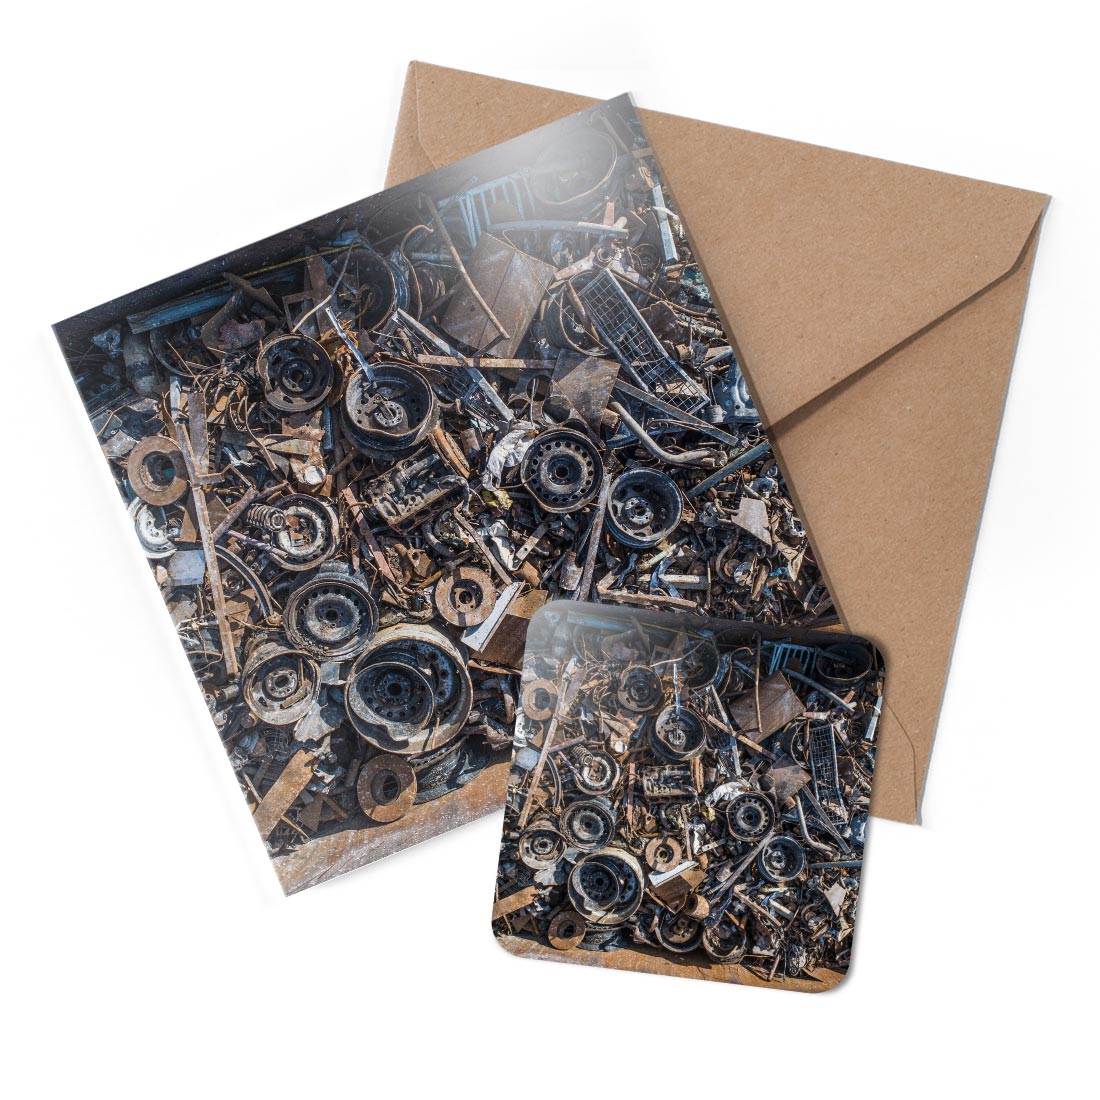 1 x Greeting Card & Coaster Set - Scrap Metal Recycling Modern Art #53406